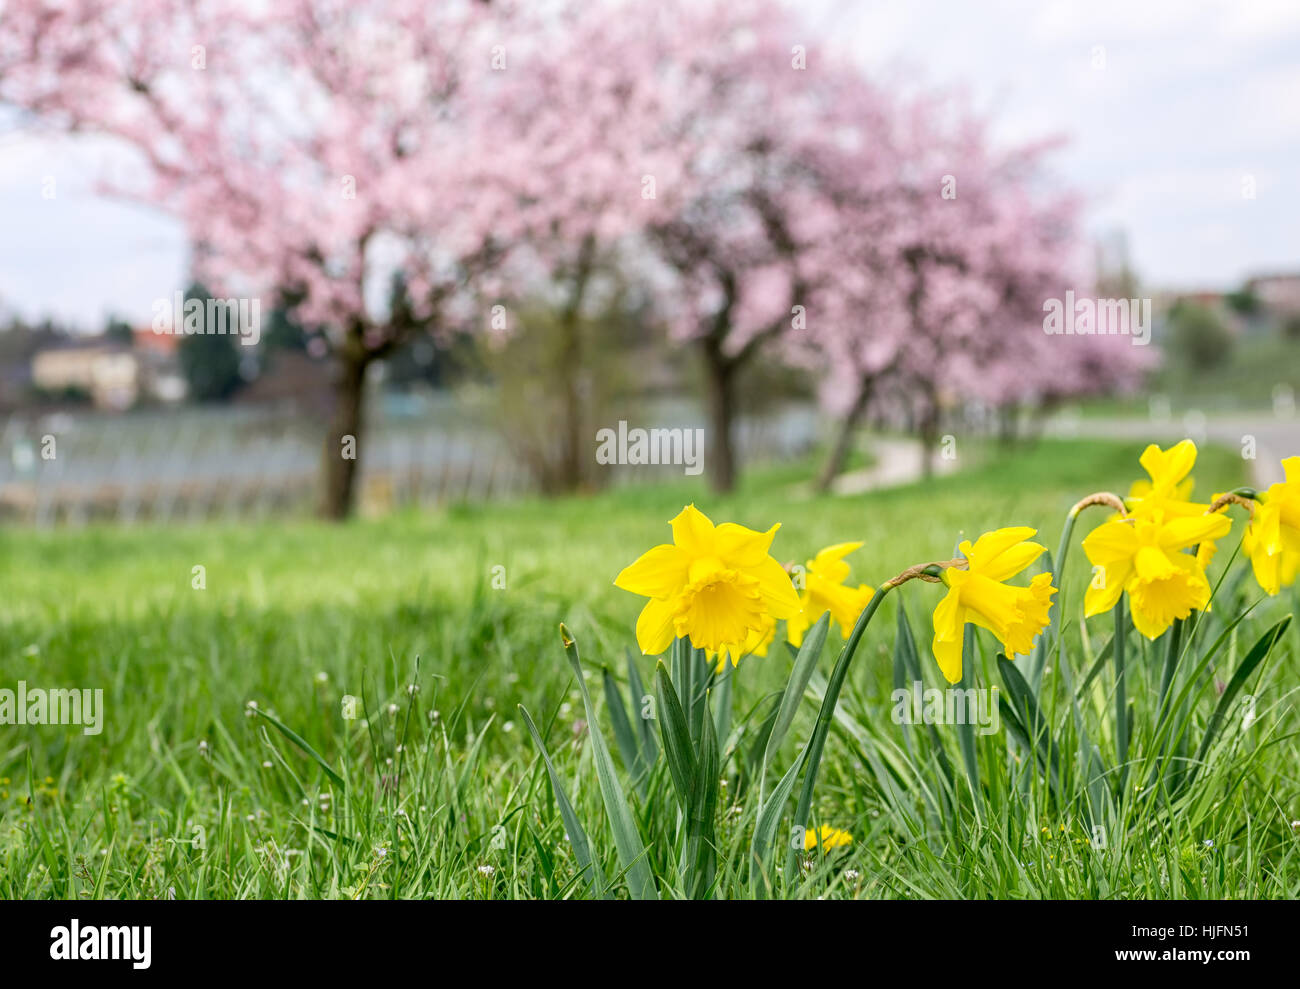 bloom, blossom, flourish, flourishing, spring, almond-blossom, almond tree, Stock Photo